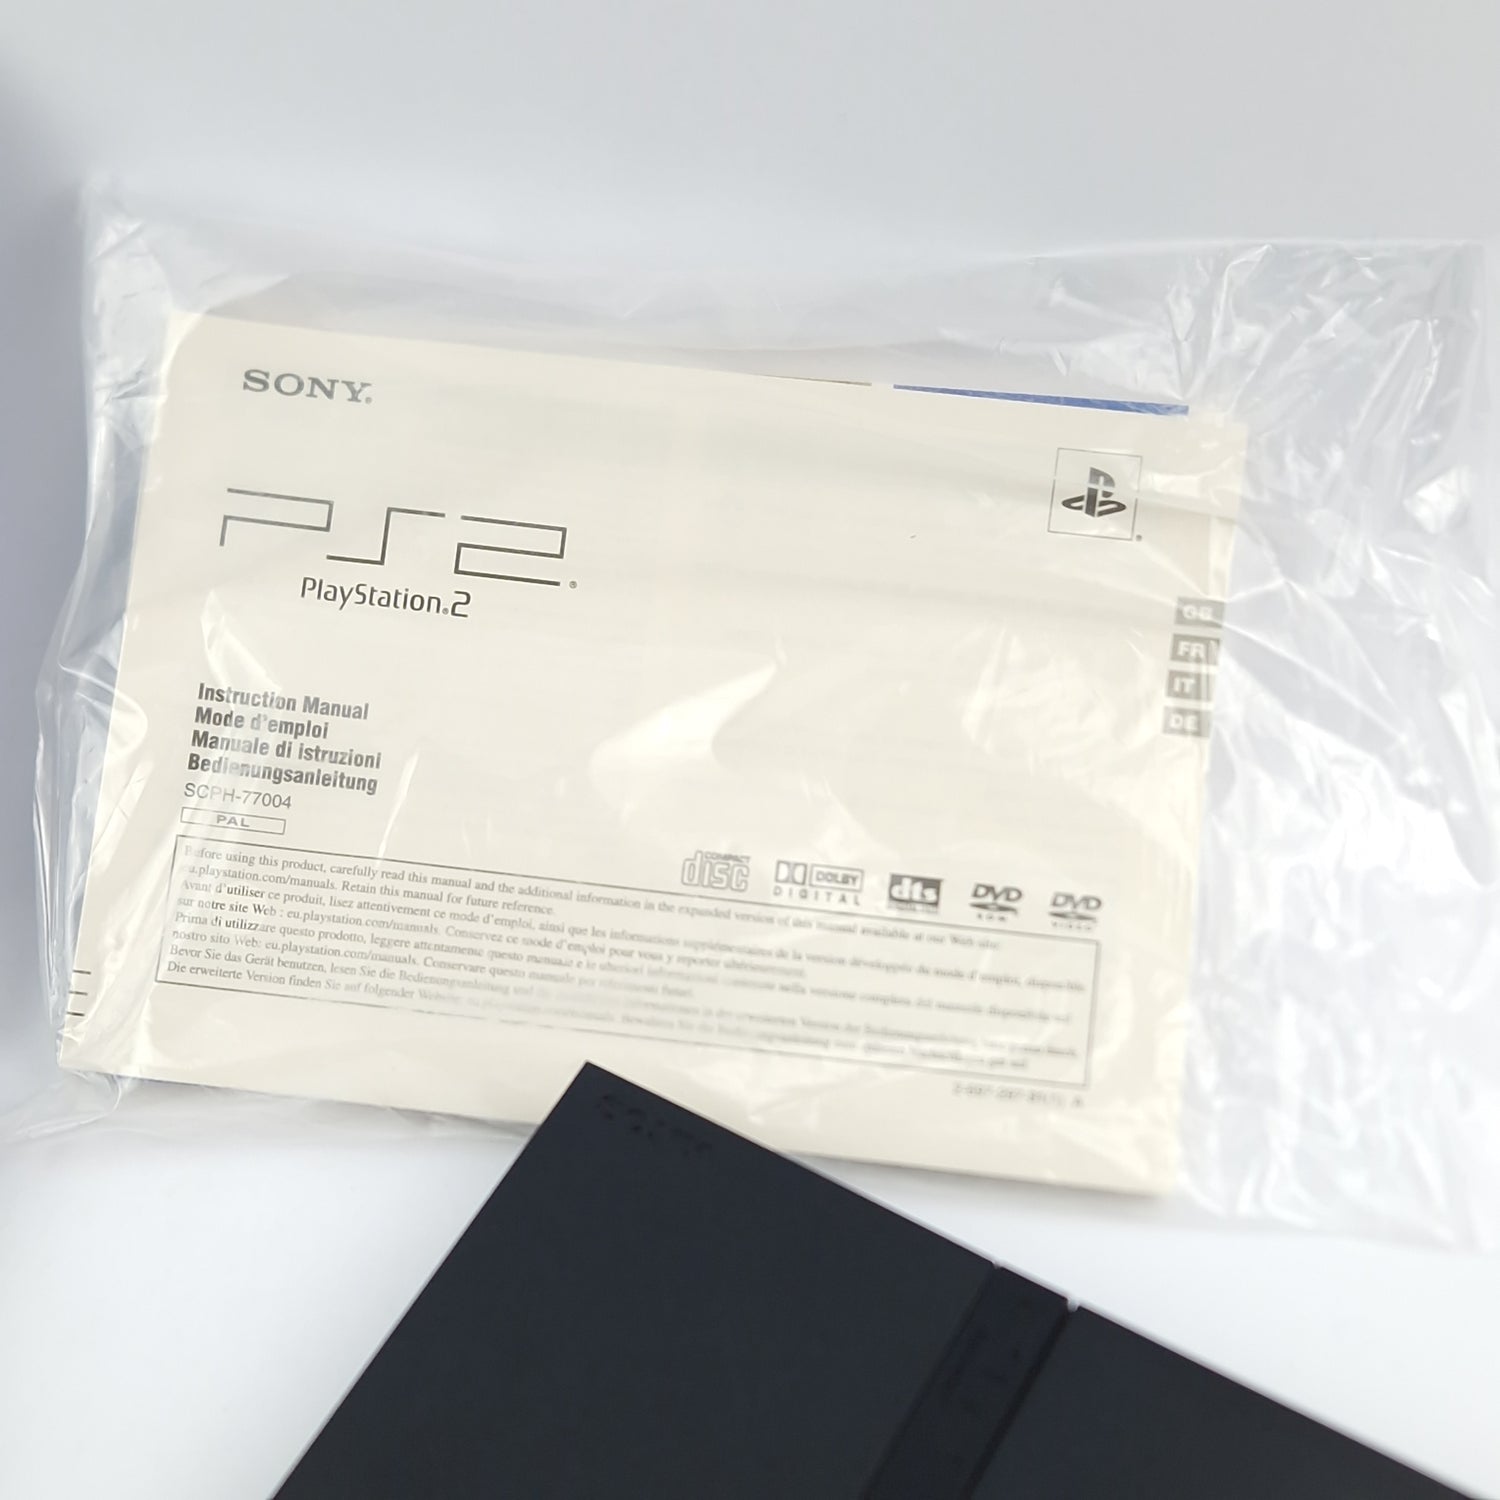 Playstation 2 Console: PS2 Singstar Apres Ski Party Bundle Set - Console OVP